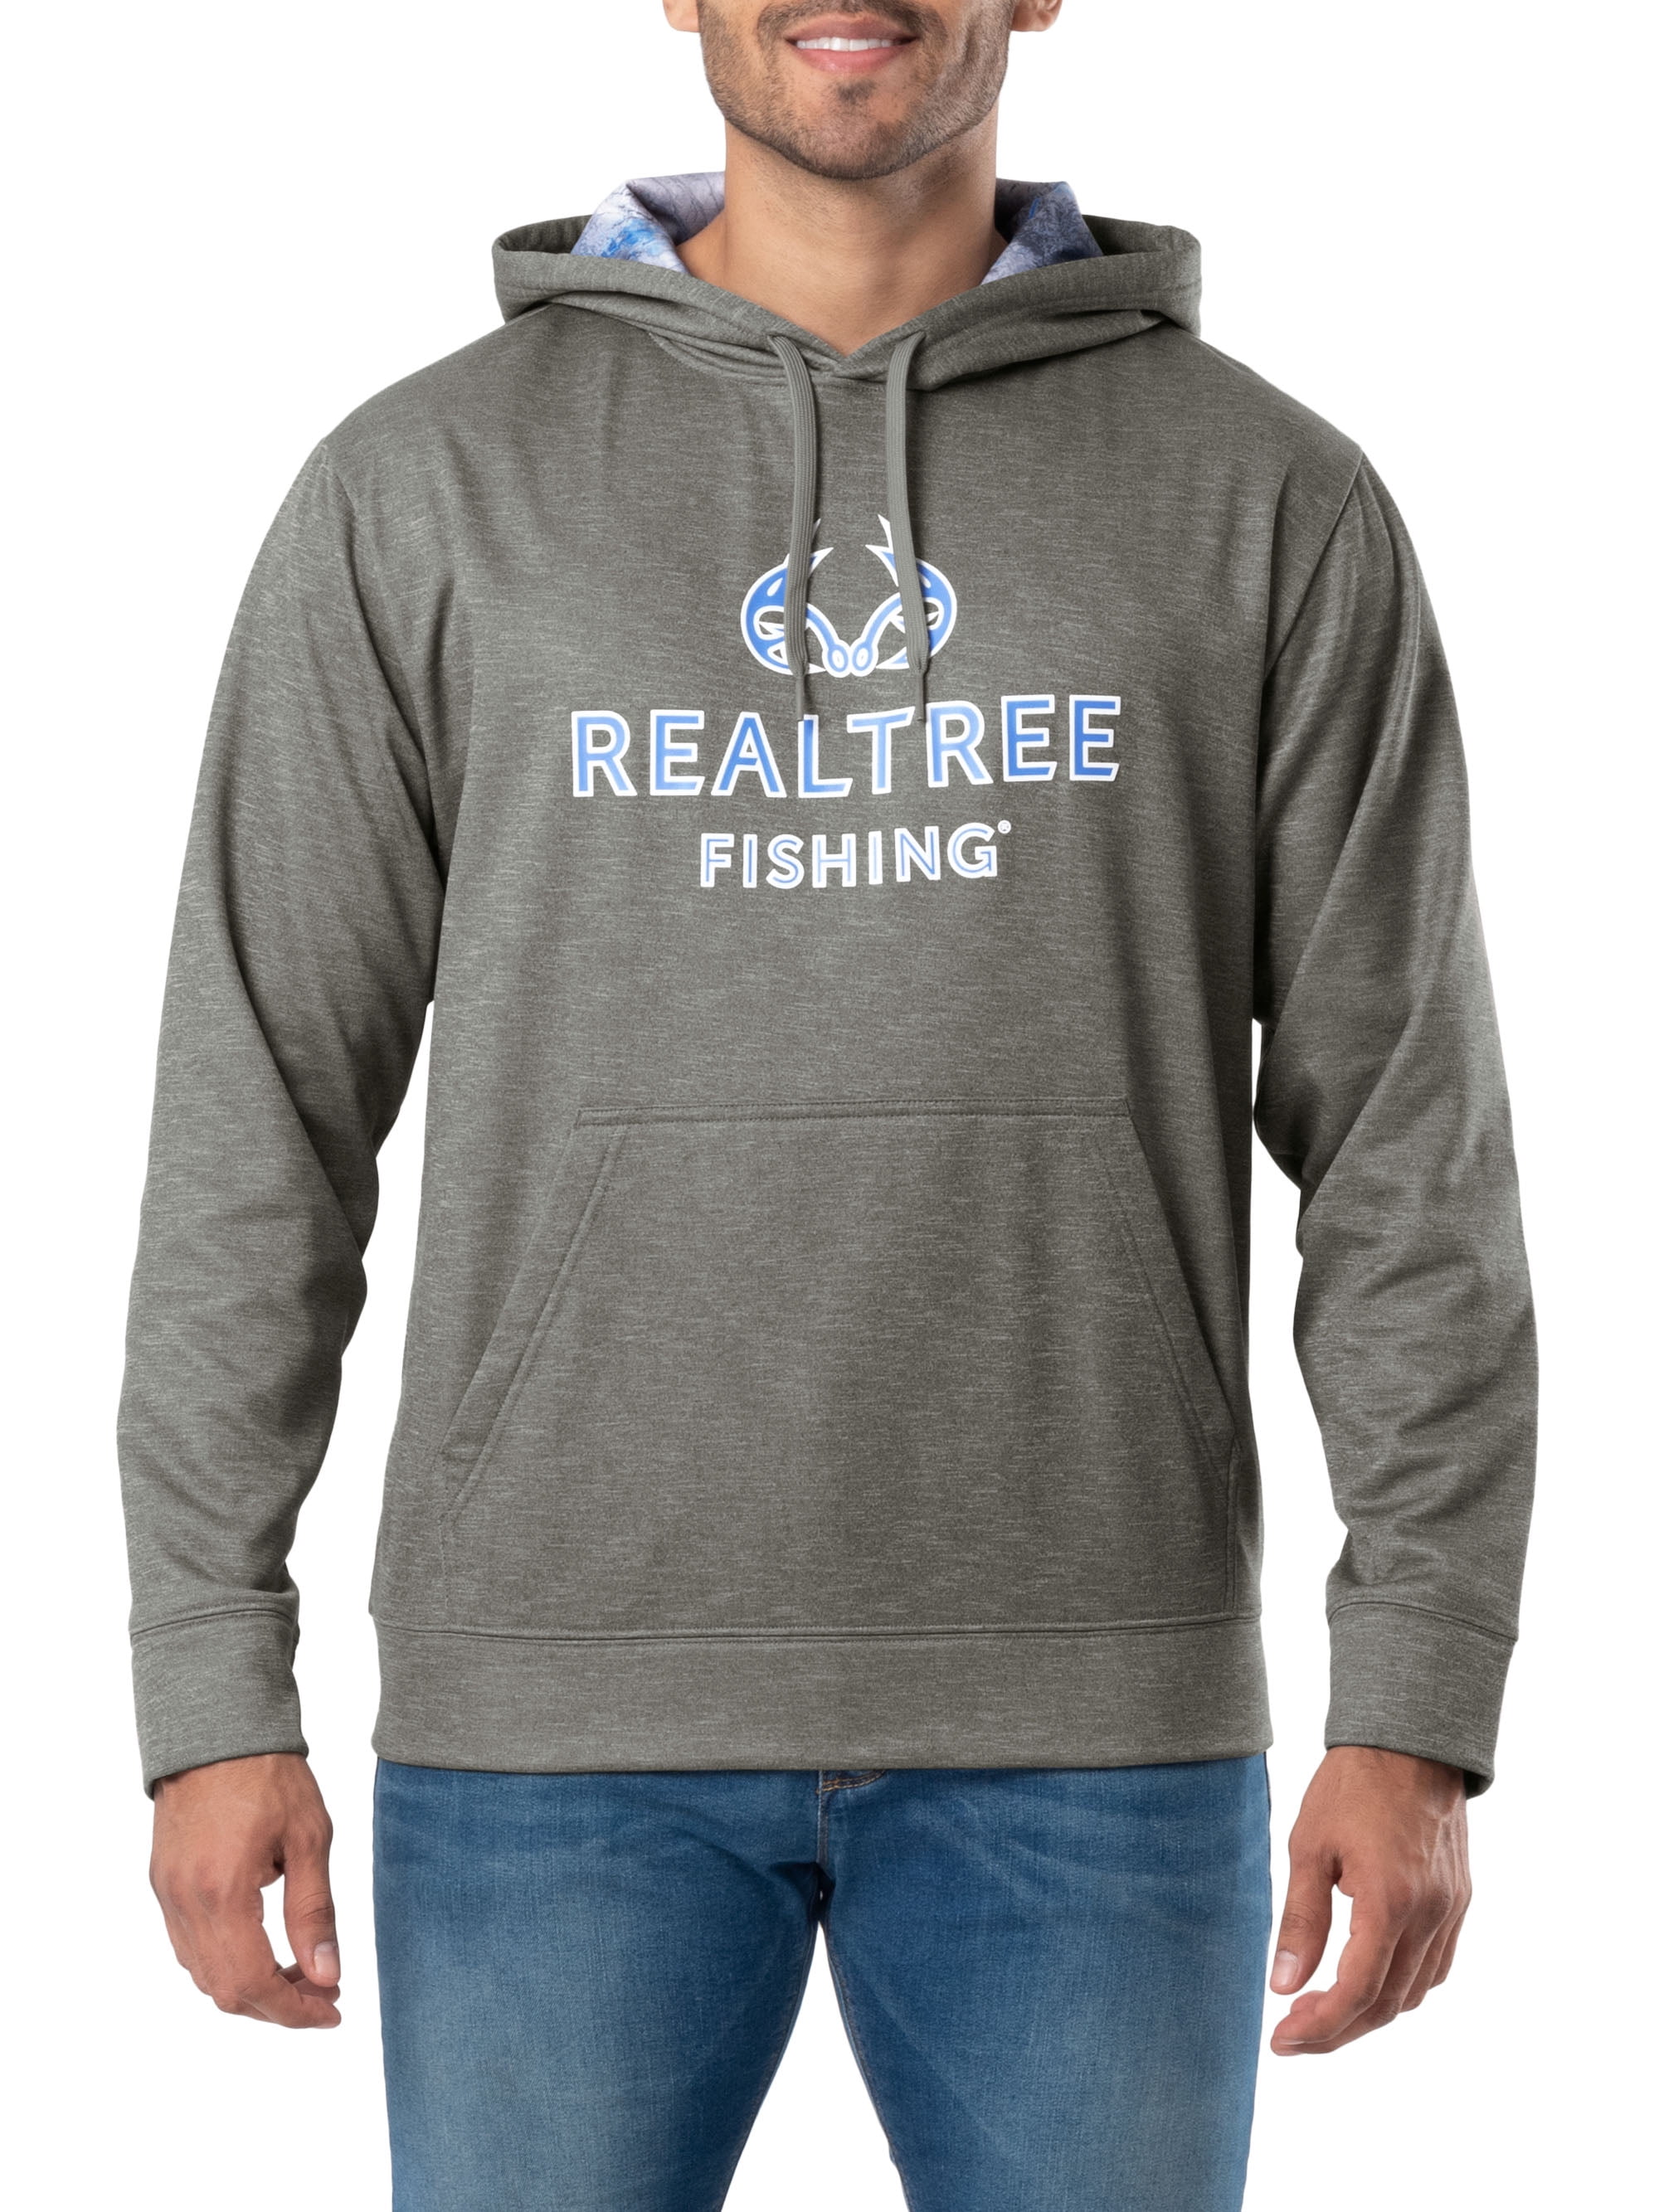 Realtree Fishing Men's Logo Performance Hoodie 